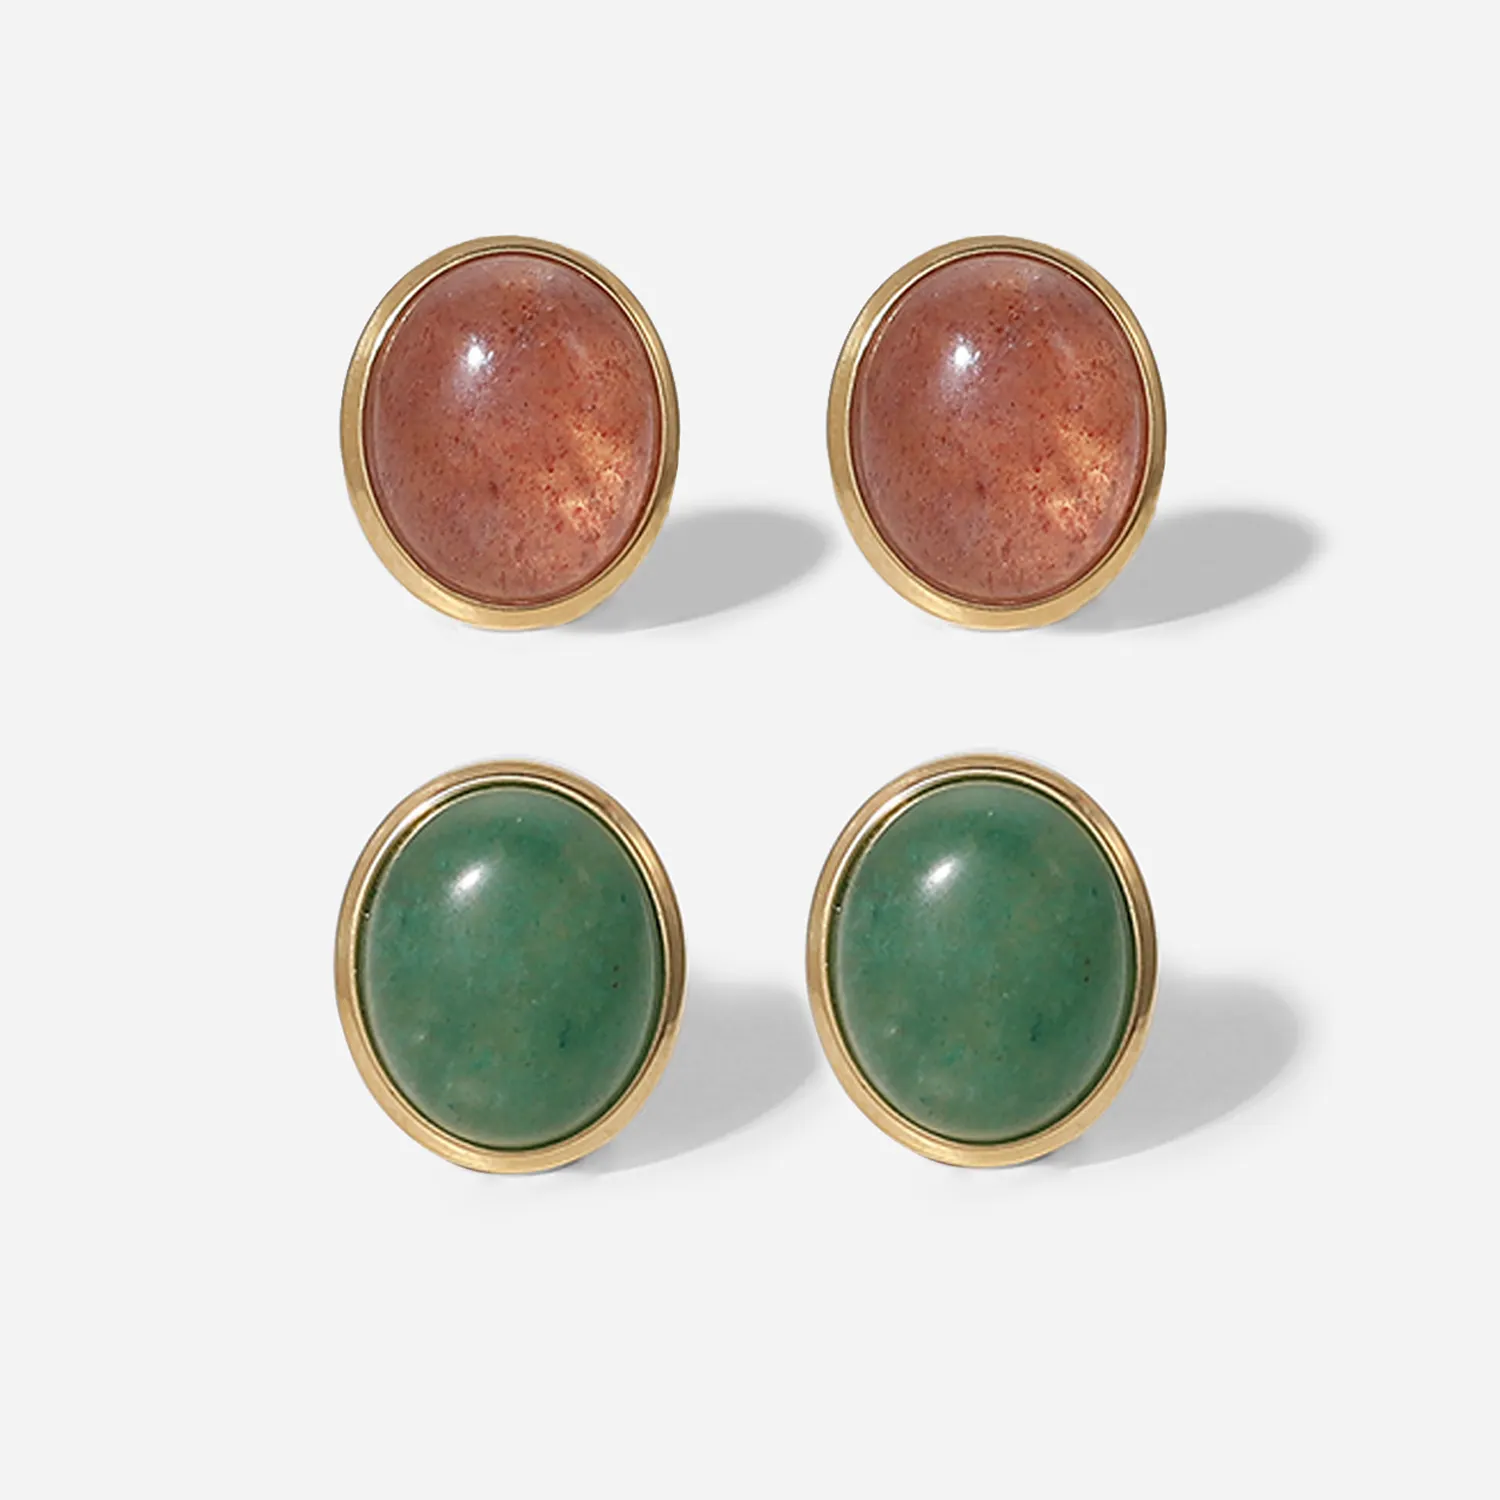 Vintage Oval Green Jade Strawberry Crystal Jewelry Earrings 14K Gold Stainless Steel Stud Earrings For Women